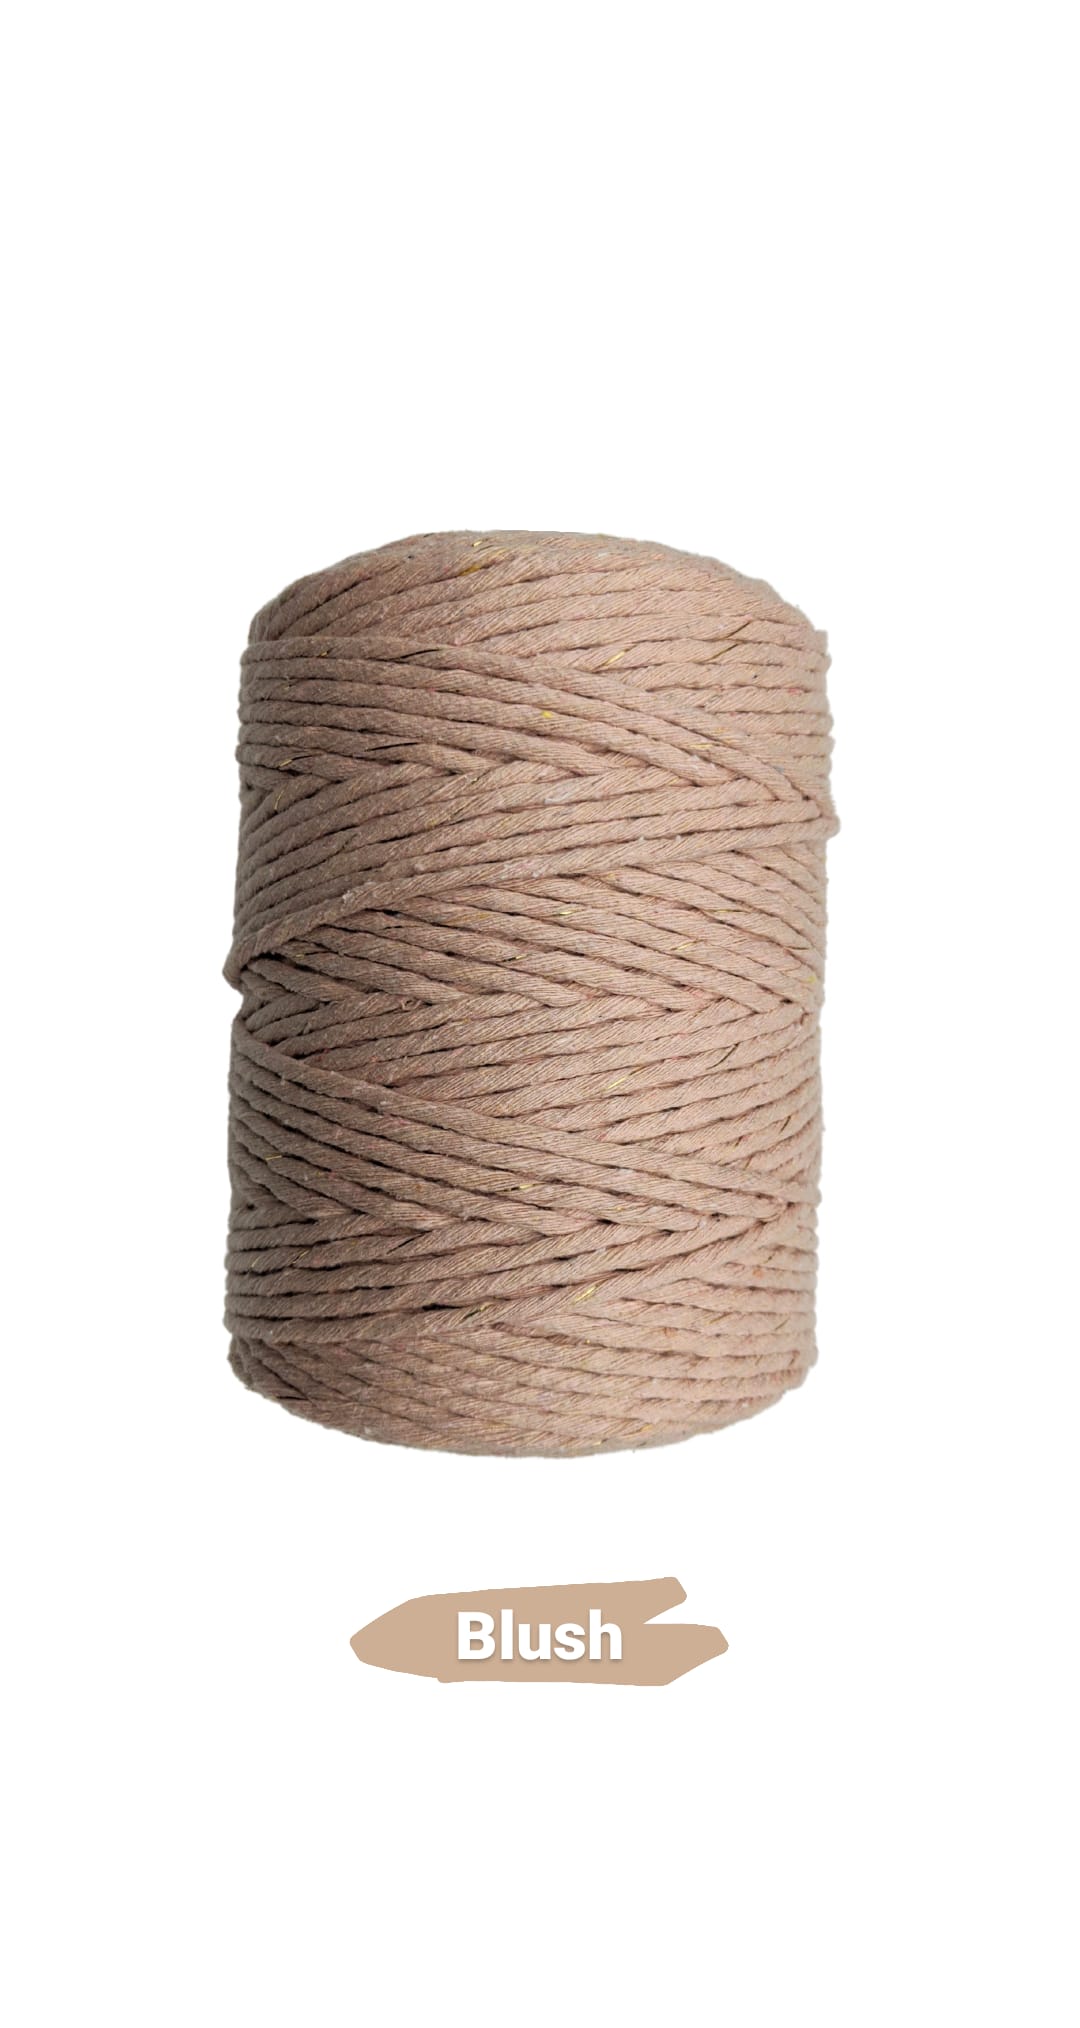 MACRAME CORD SET // 300 ft of 3mm Single Twist Cotton Cord